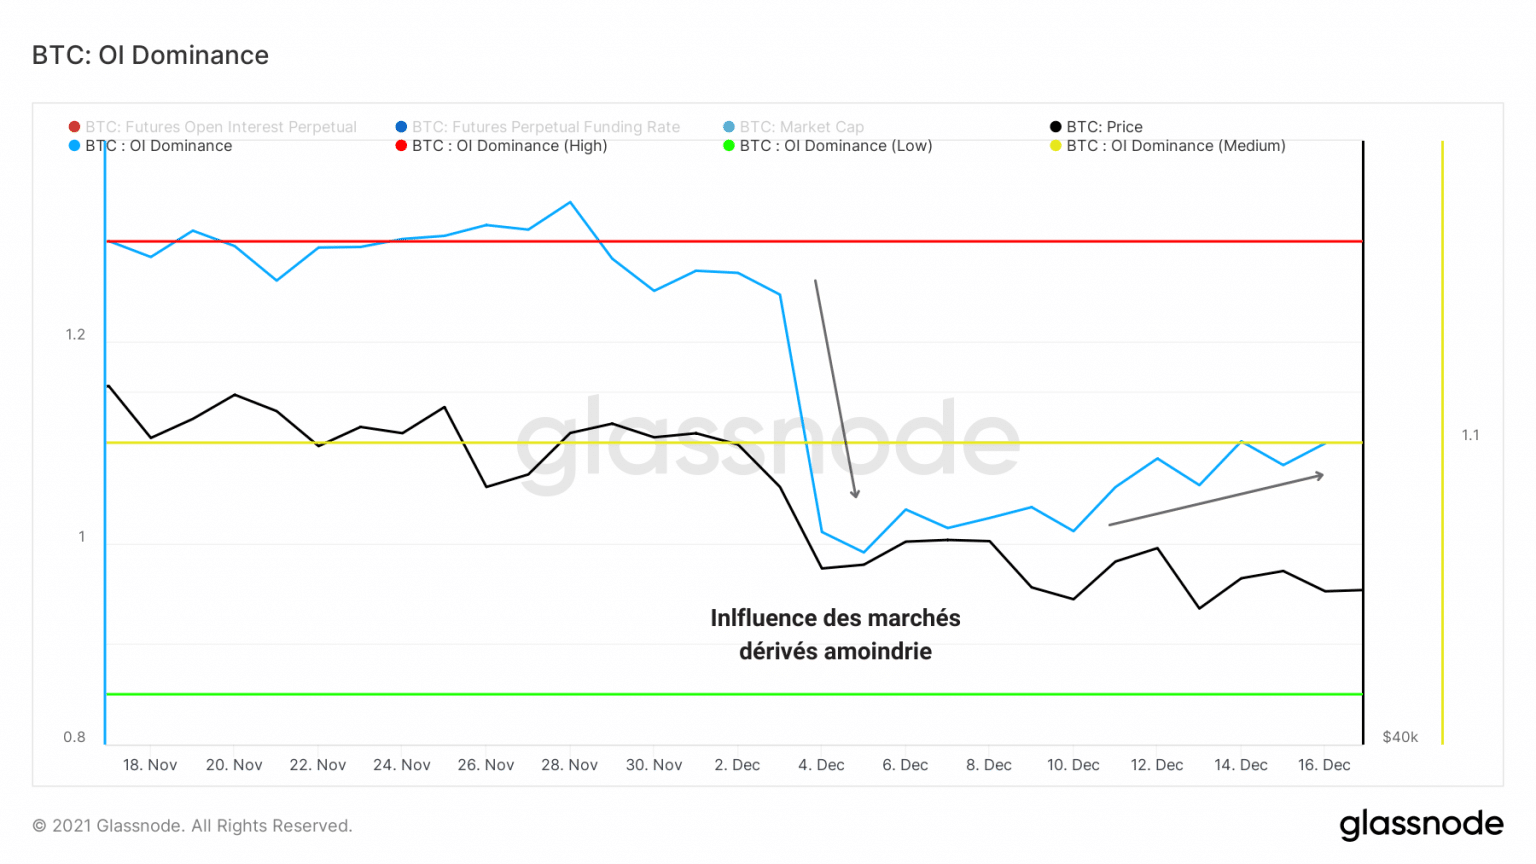 Open interest dominance chart (Source: Glassnode)